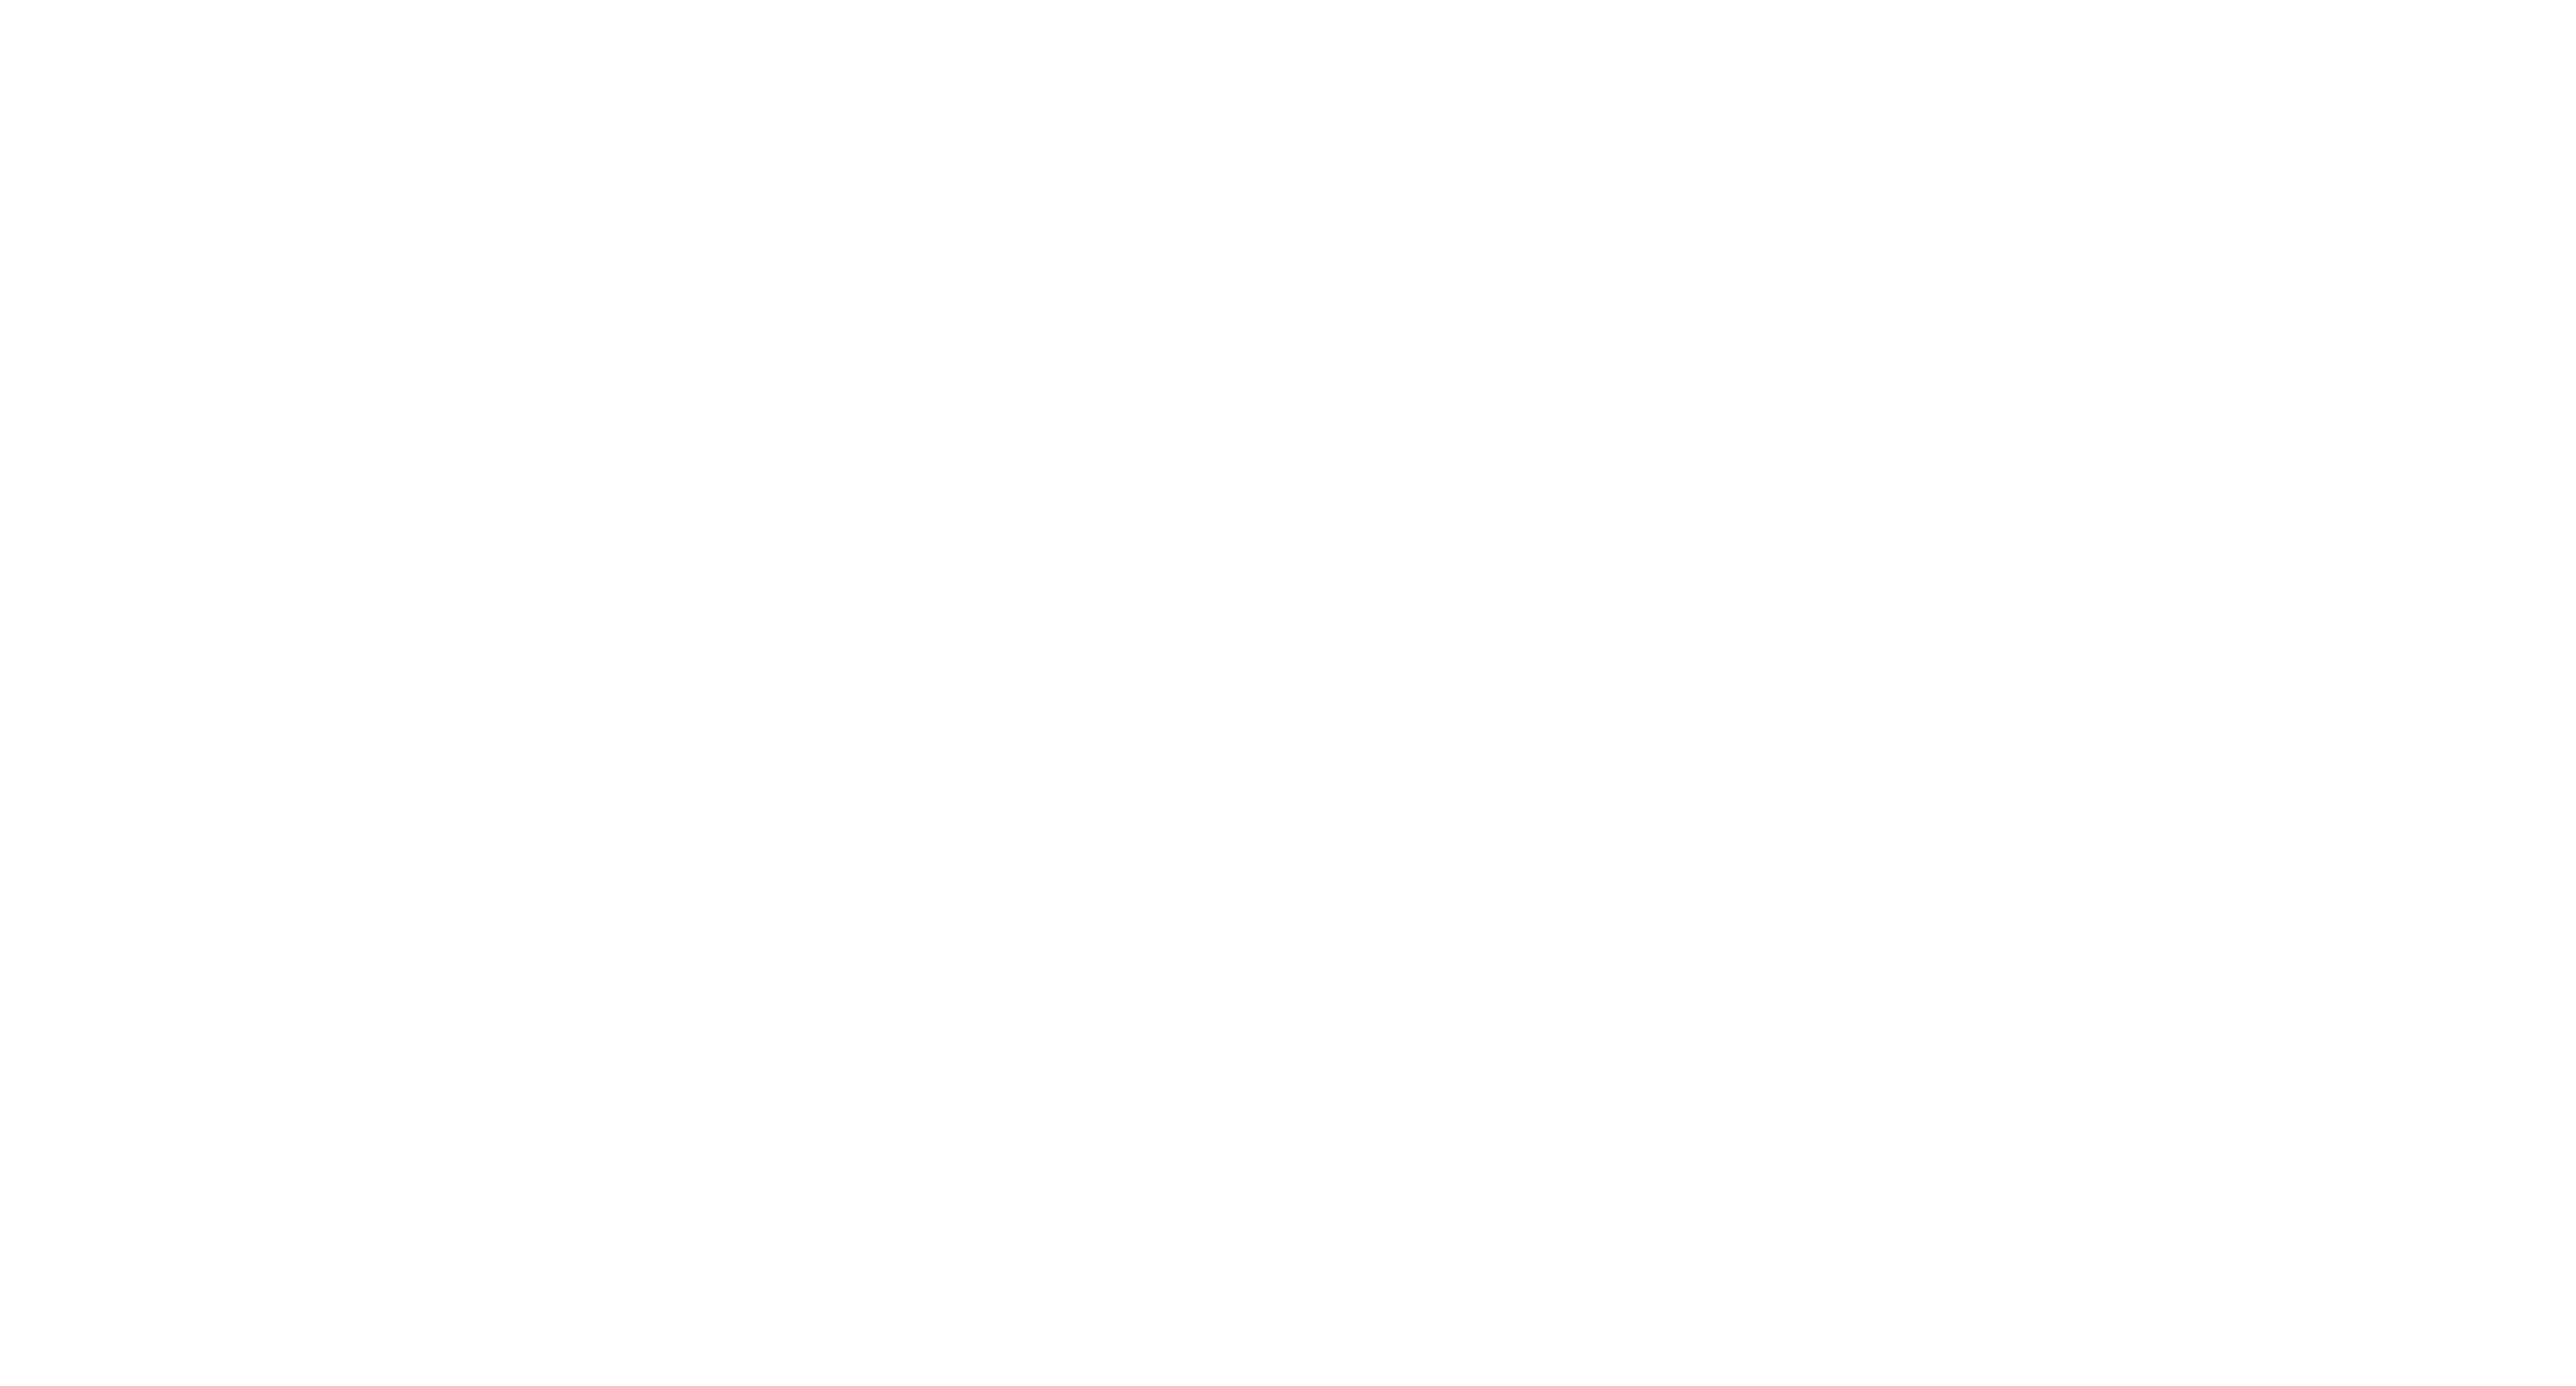 iCracked 日本上陸